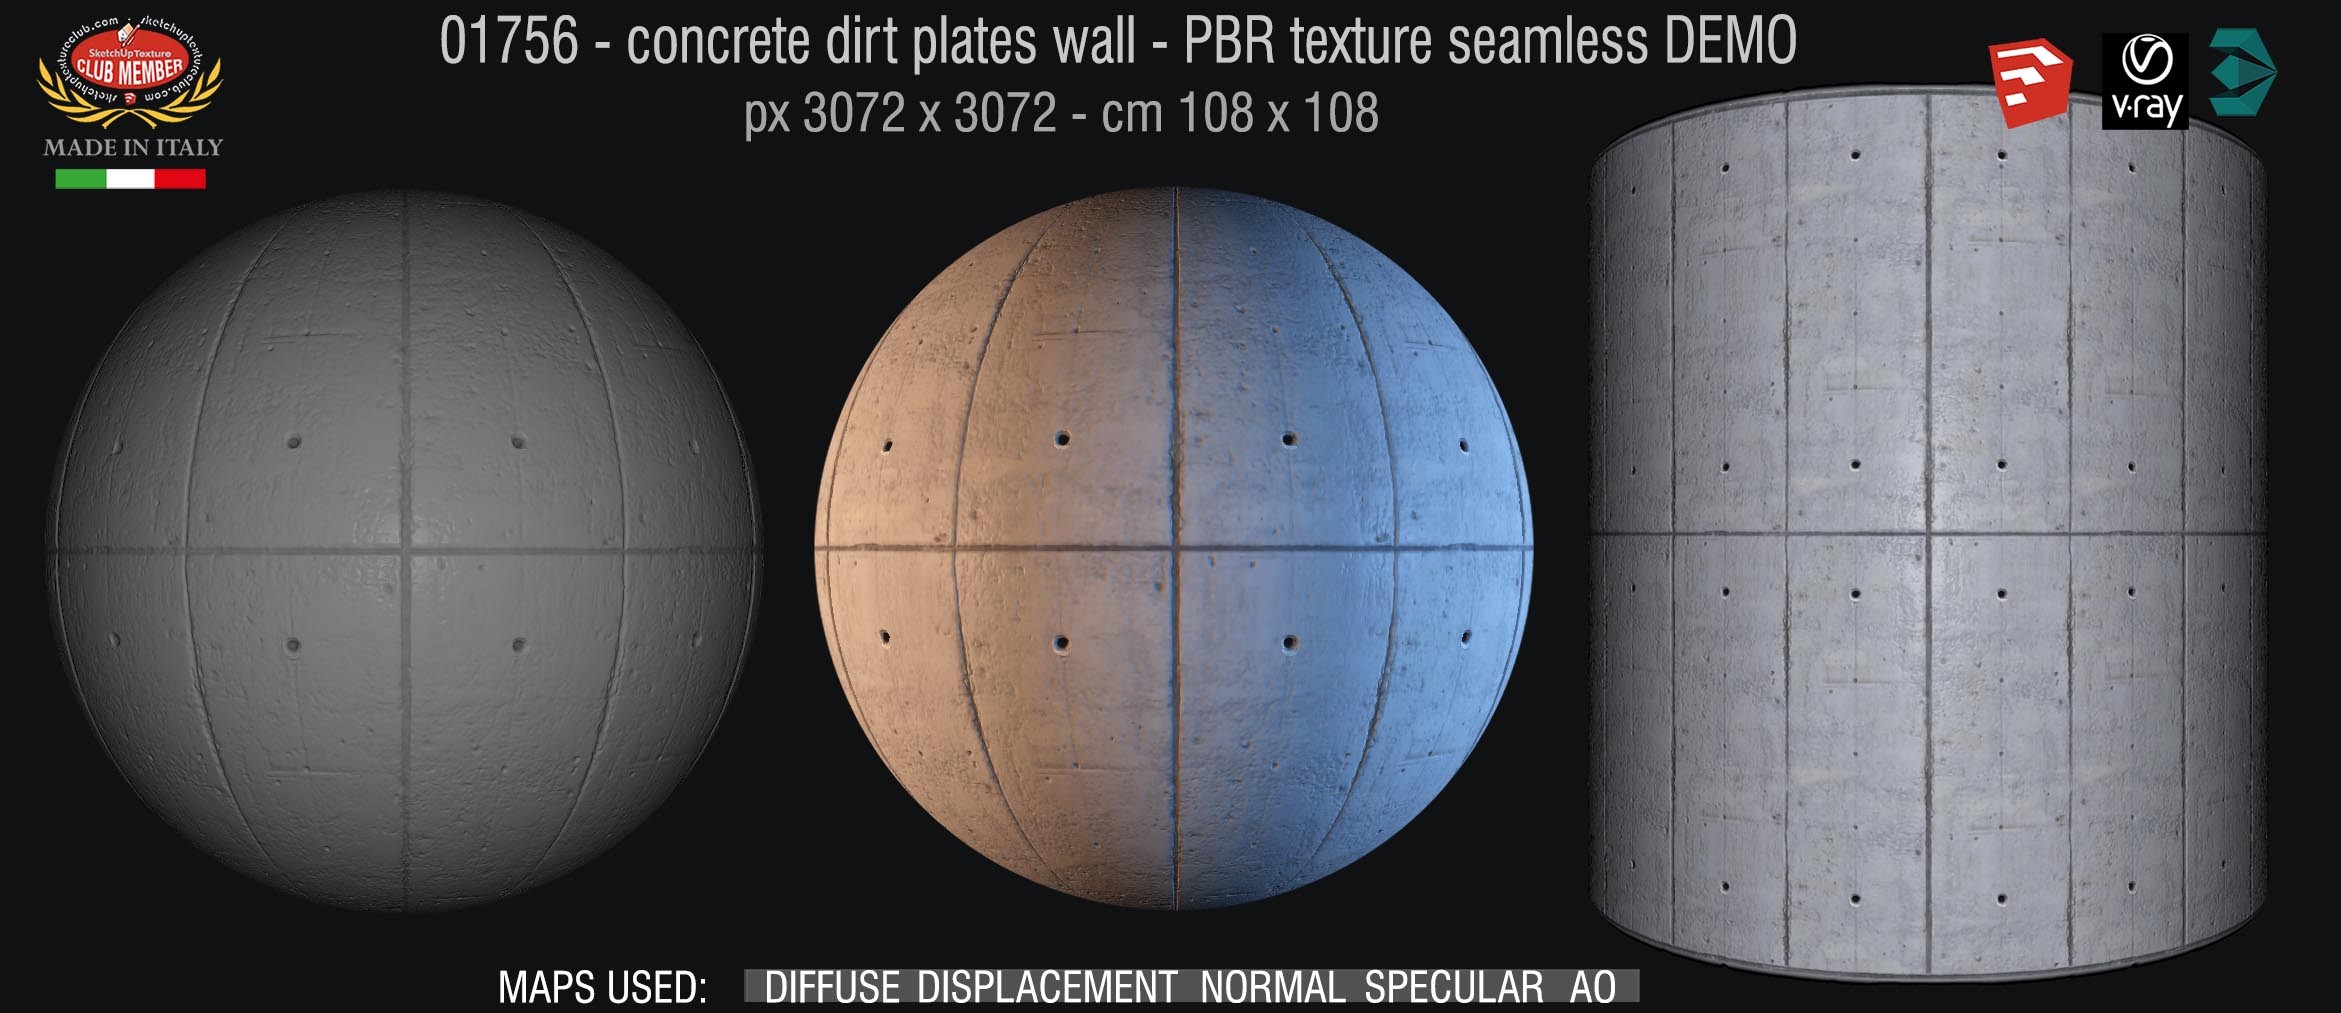 01756 concrete dirt plates wall PBR texture seamless DEMO